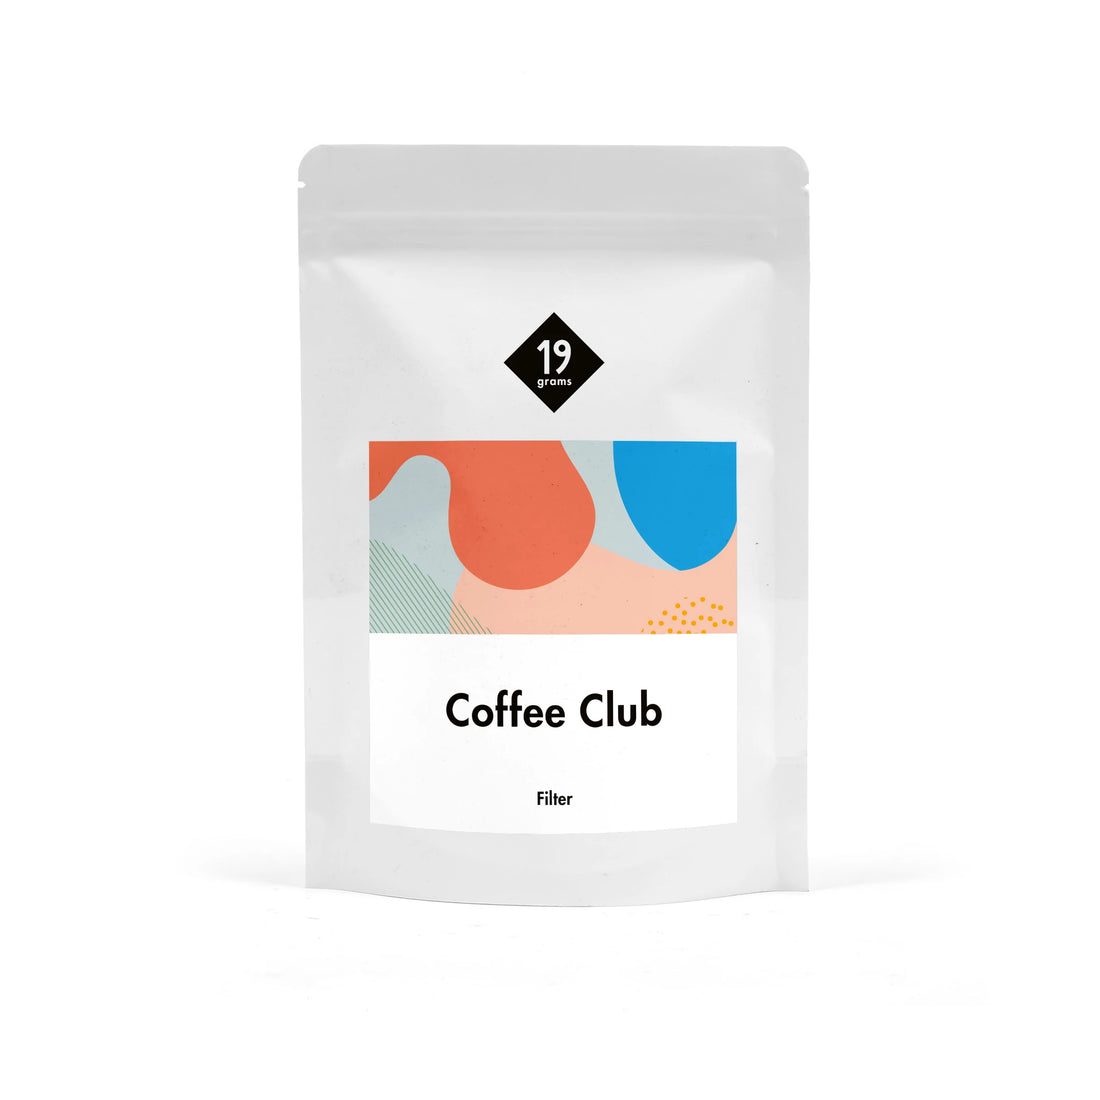 19grams Coffee Club Filter Kaffee Beutel